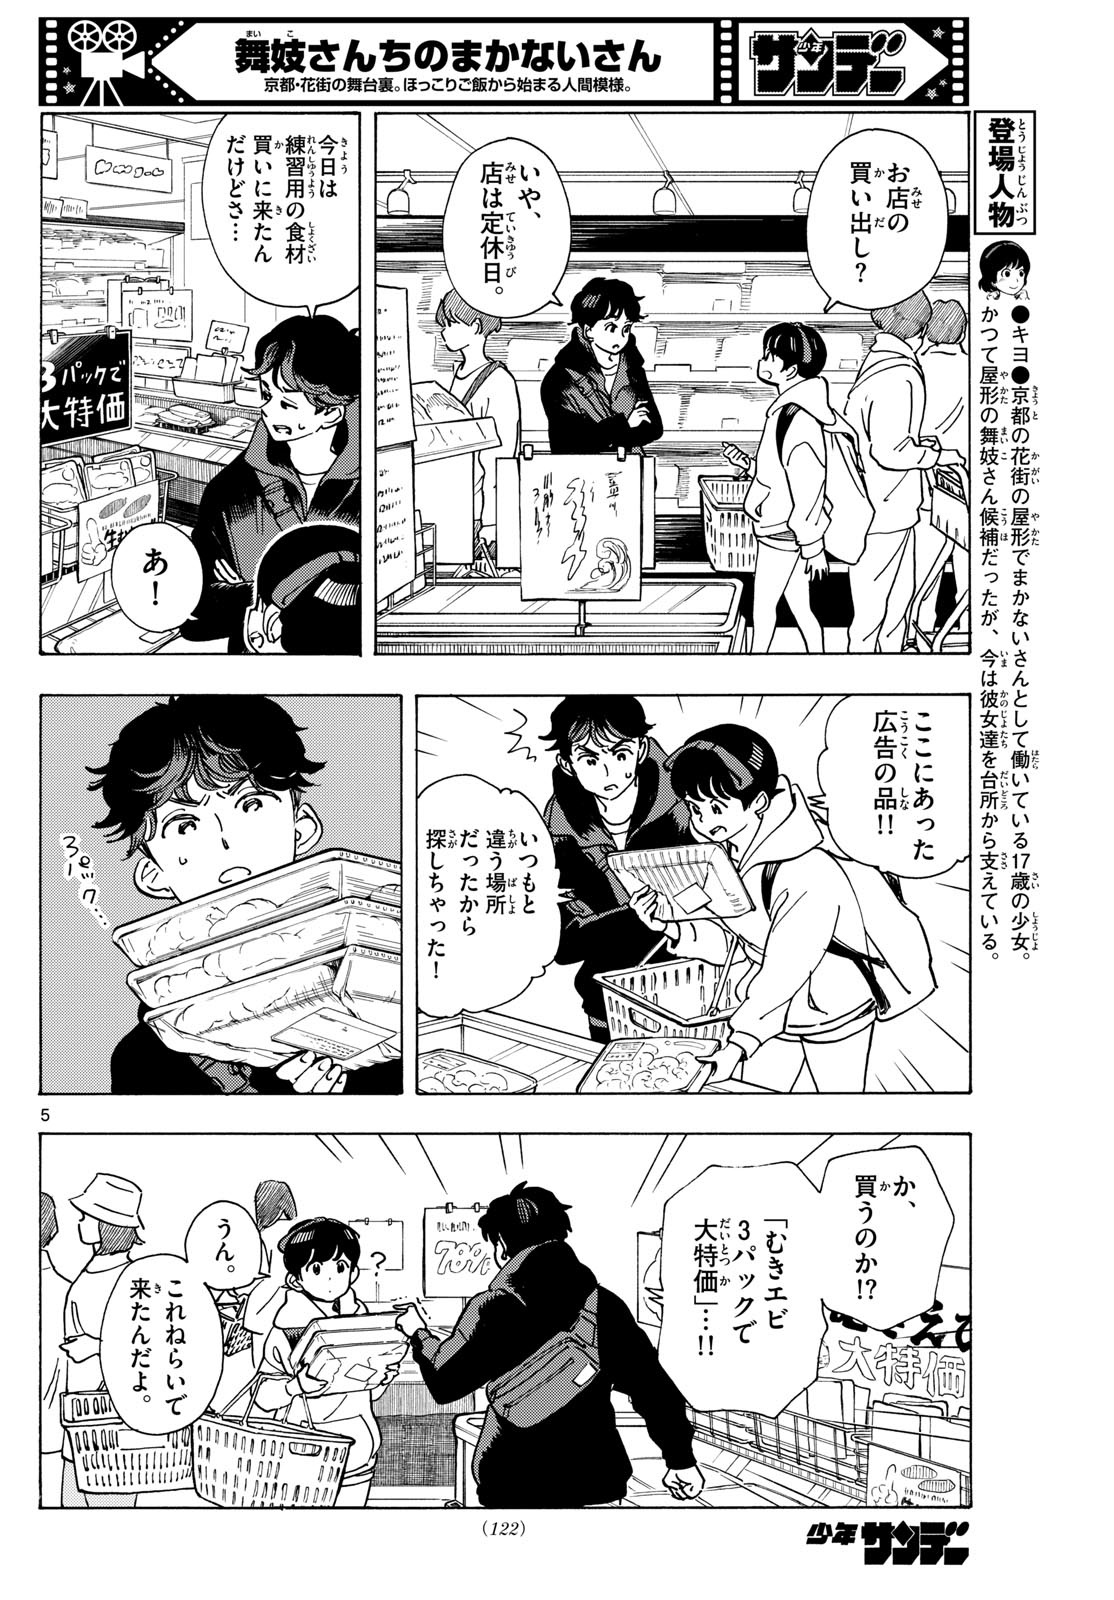 Maiko-san Chi no Makanai-san - Chapter 287 - Page 6